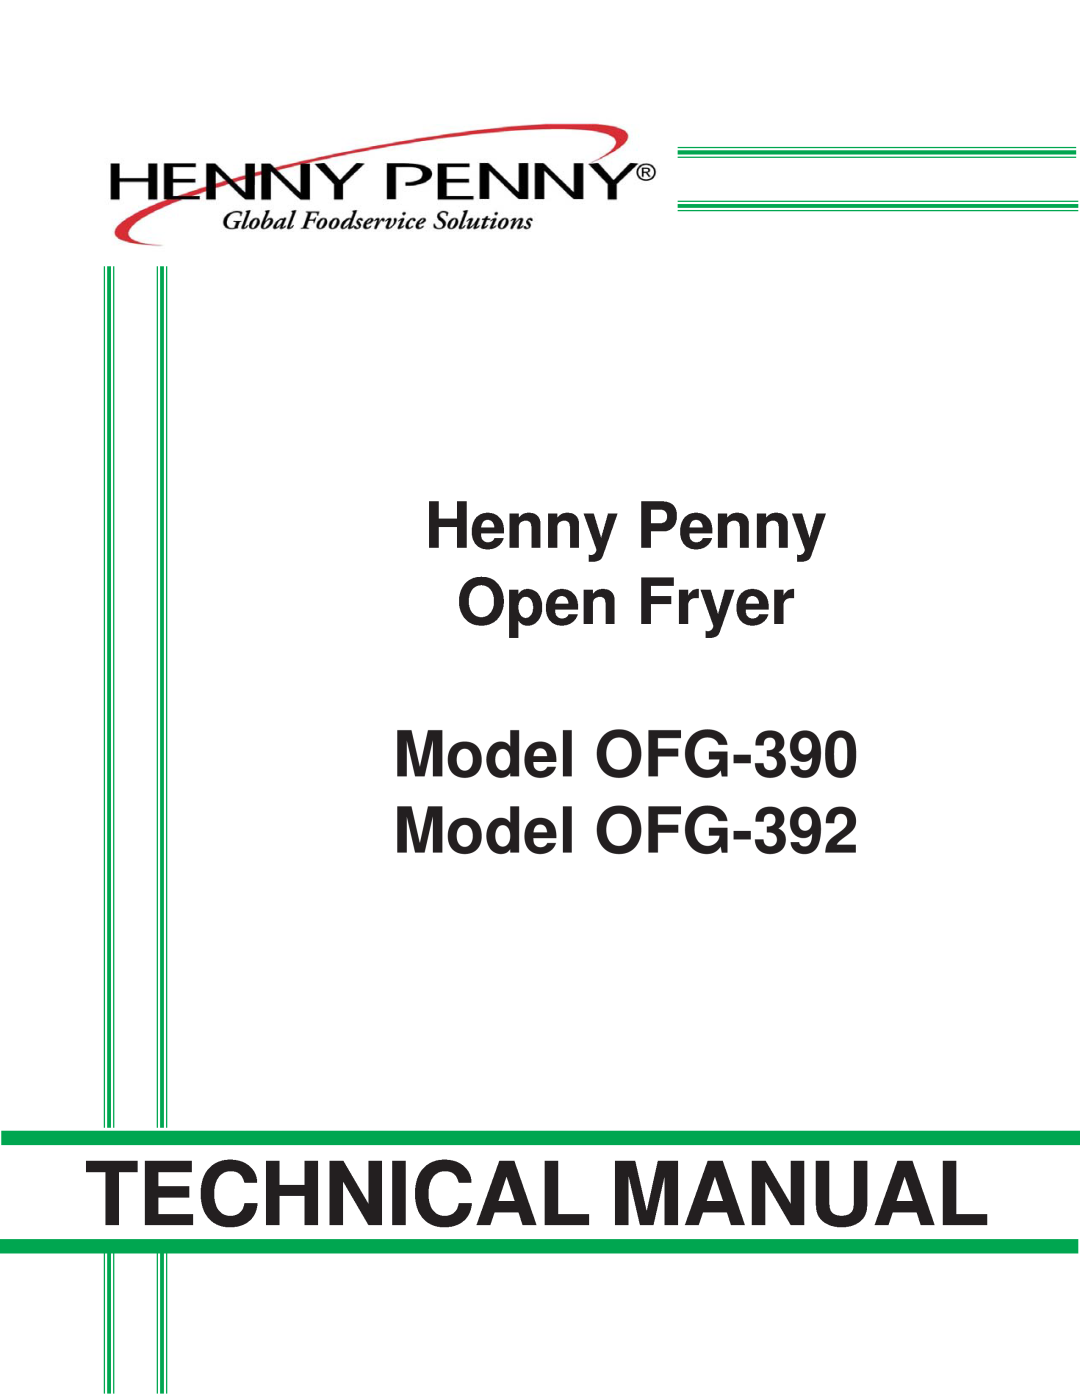 Henny Penny technical manual Technical Manual, Henny Penny Open Fryer Model OFG-390Model OFG-392 